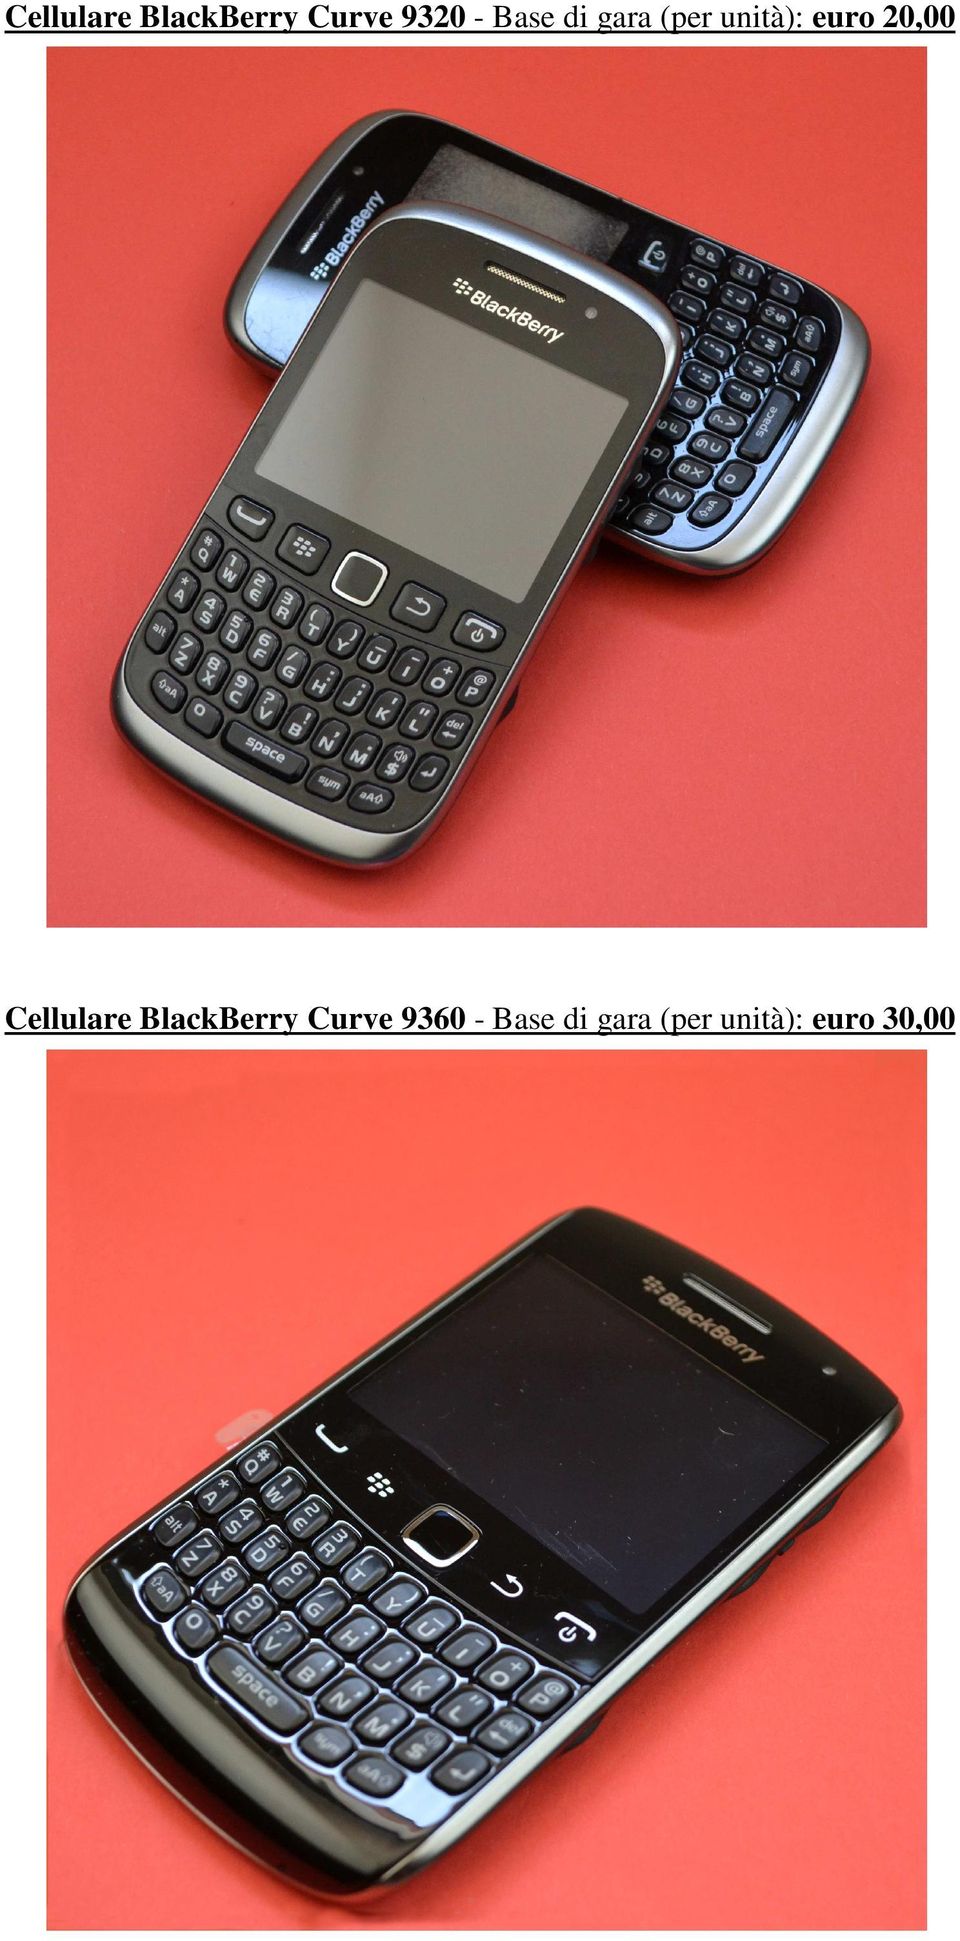 20,00 Cellulare BlackBerry Curve